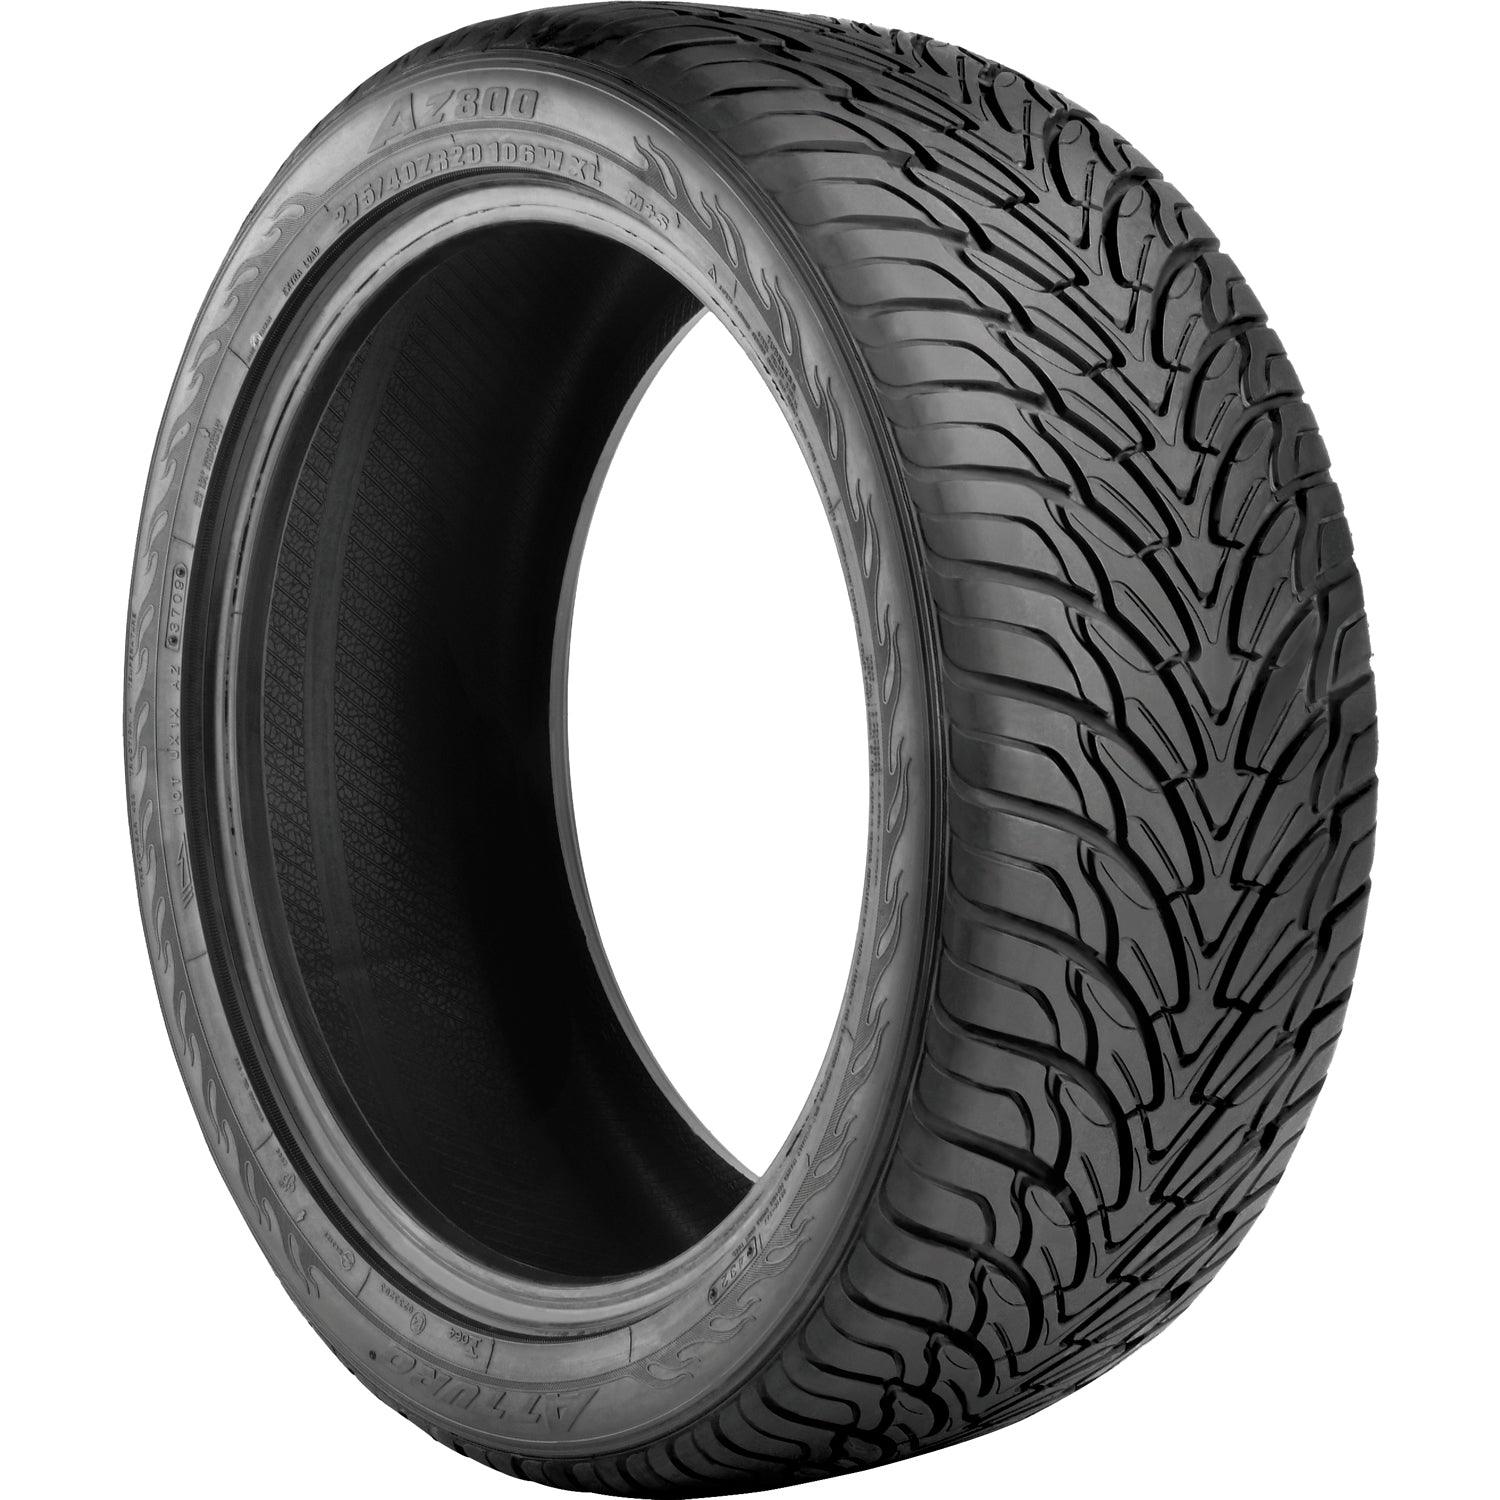 ATTURO AZ800 305/35R24 (32.4X12.3R 24) Tires